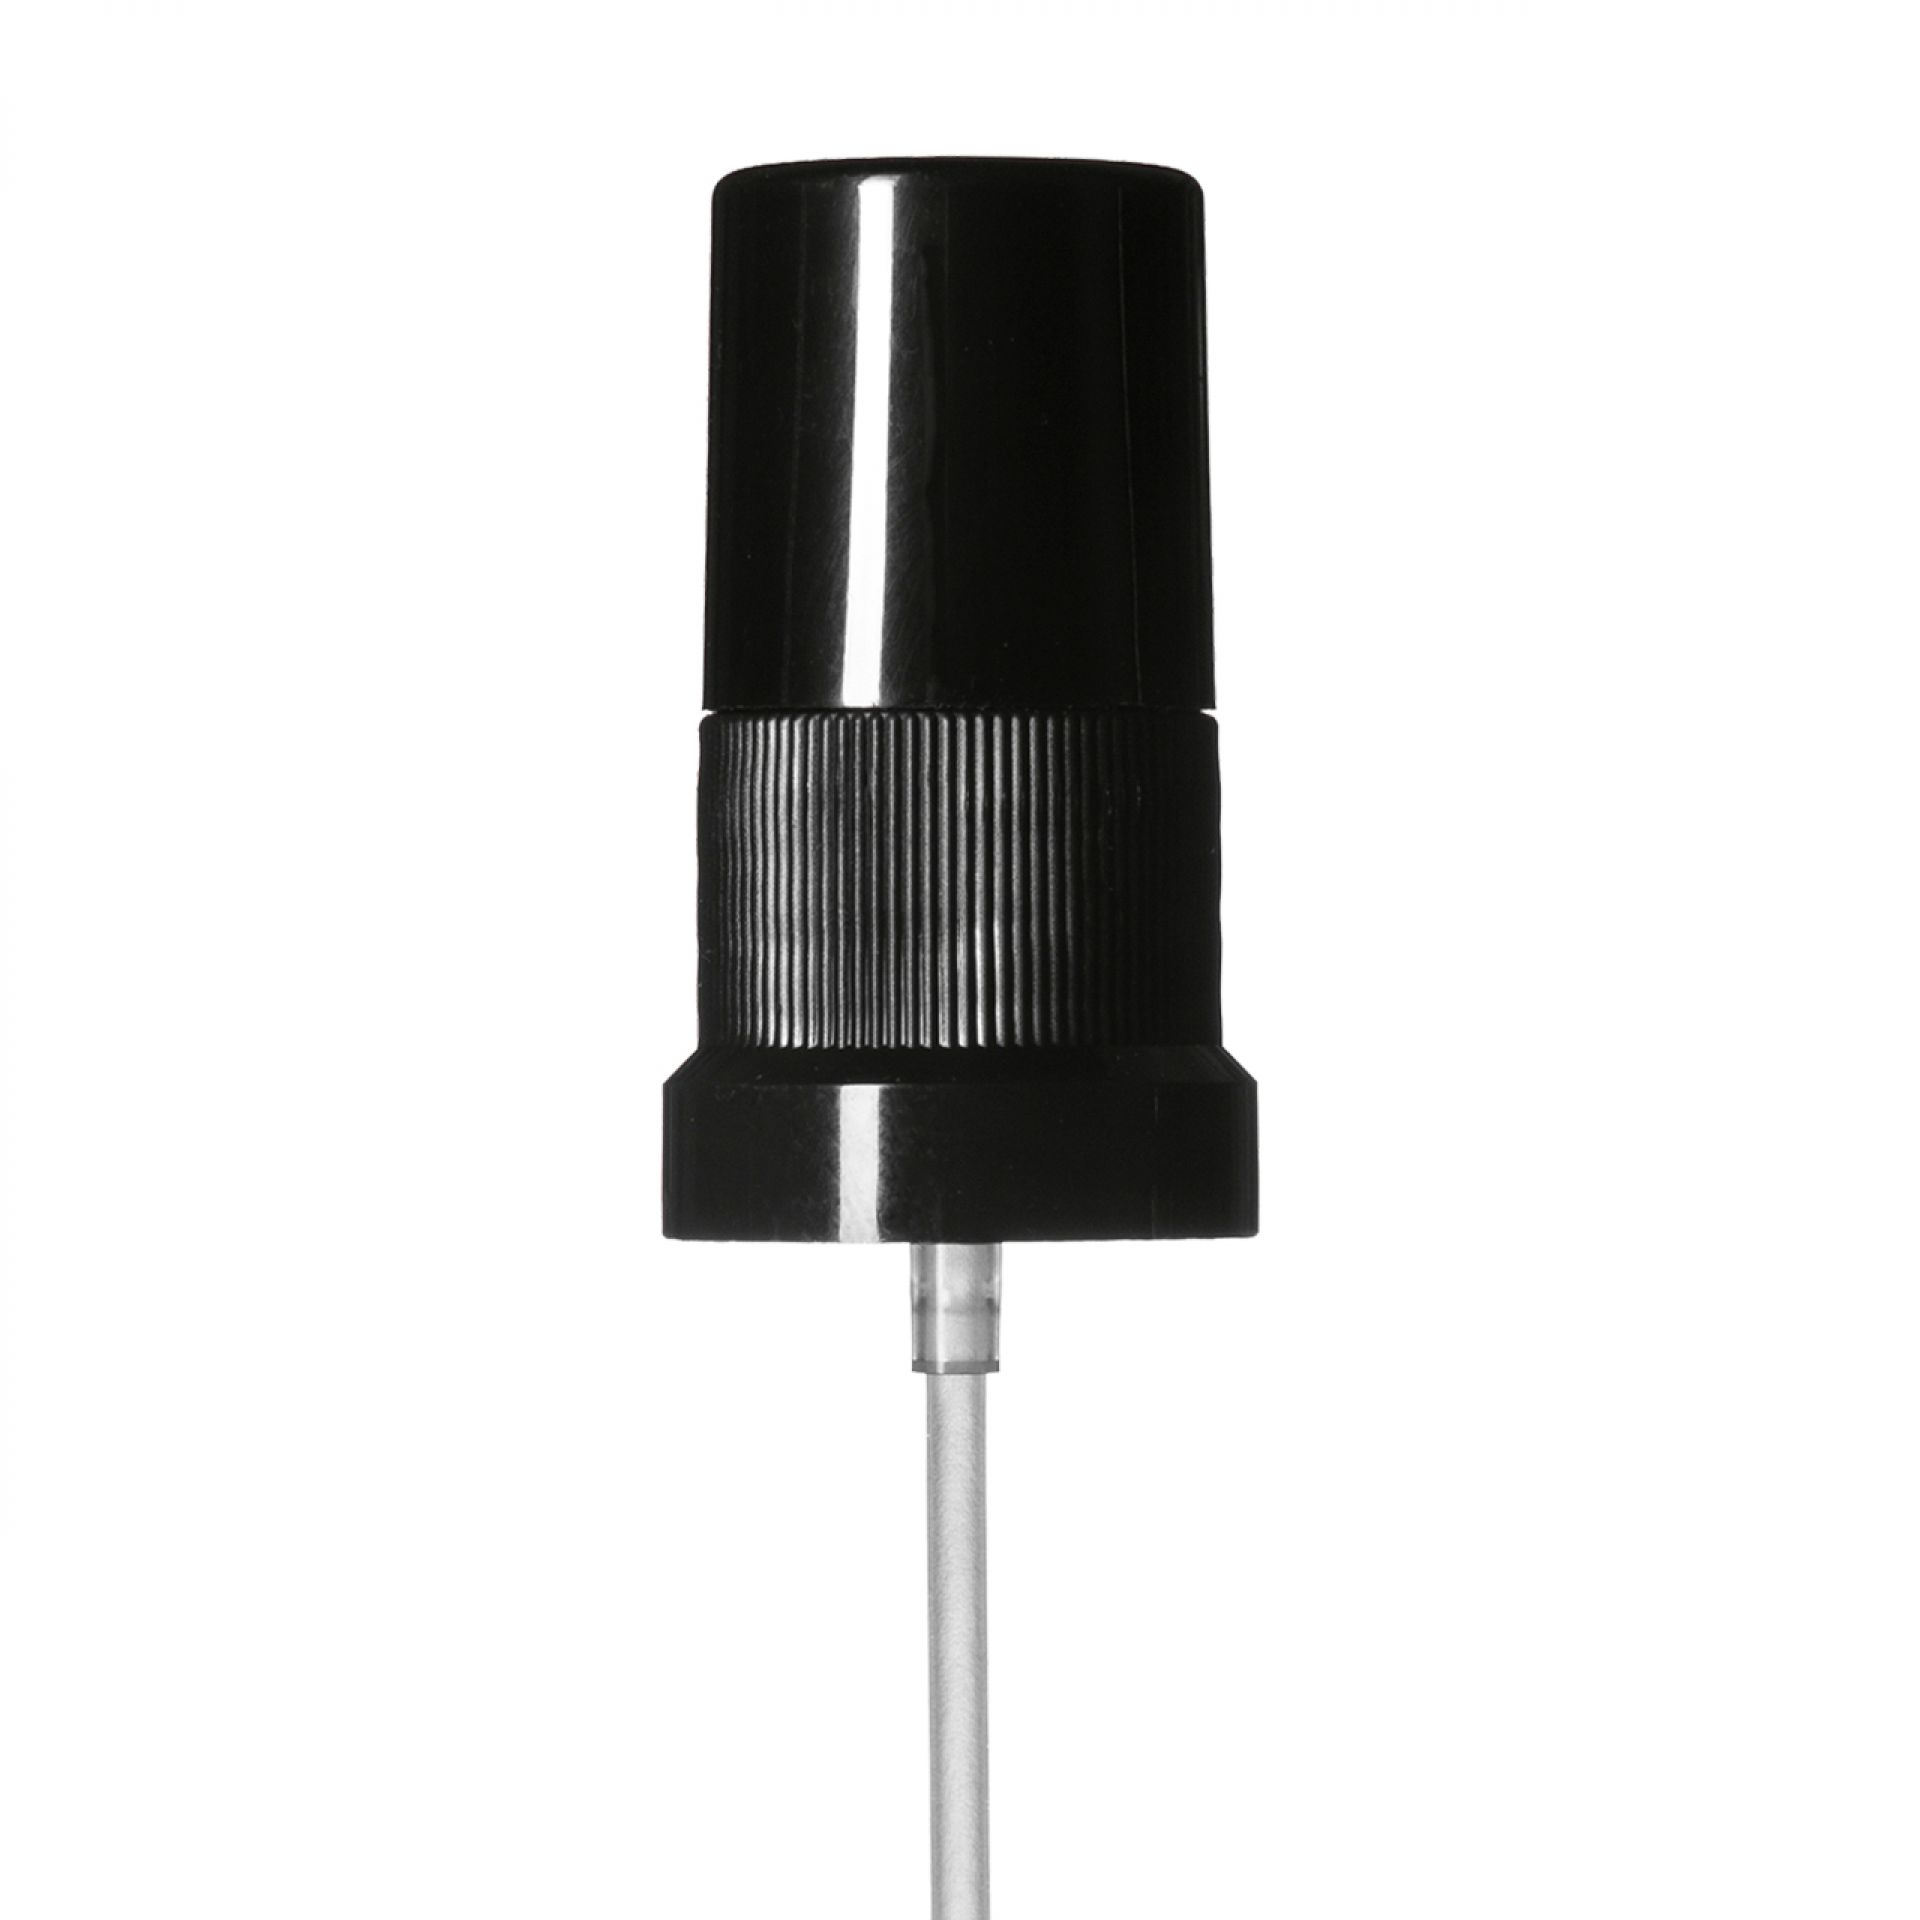 Mist sprayer Classic, DIN18, PP, black, ribbed, dose 0.10ml, black overcap (Orion 100)